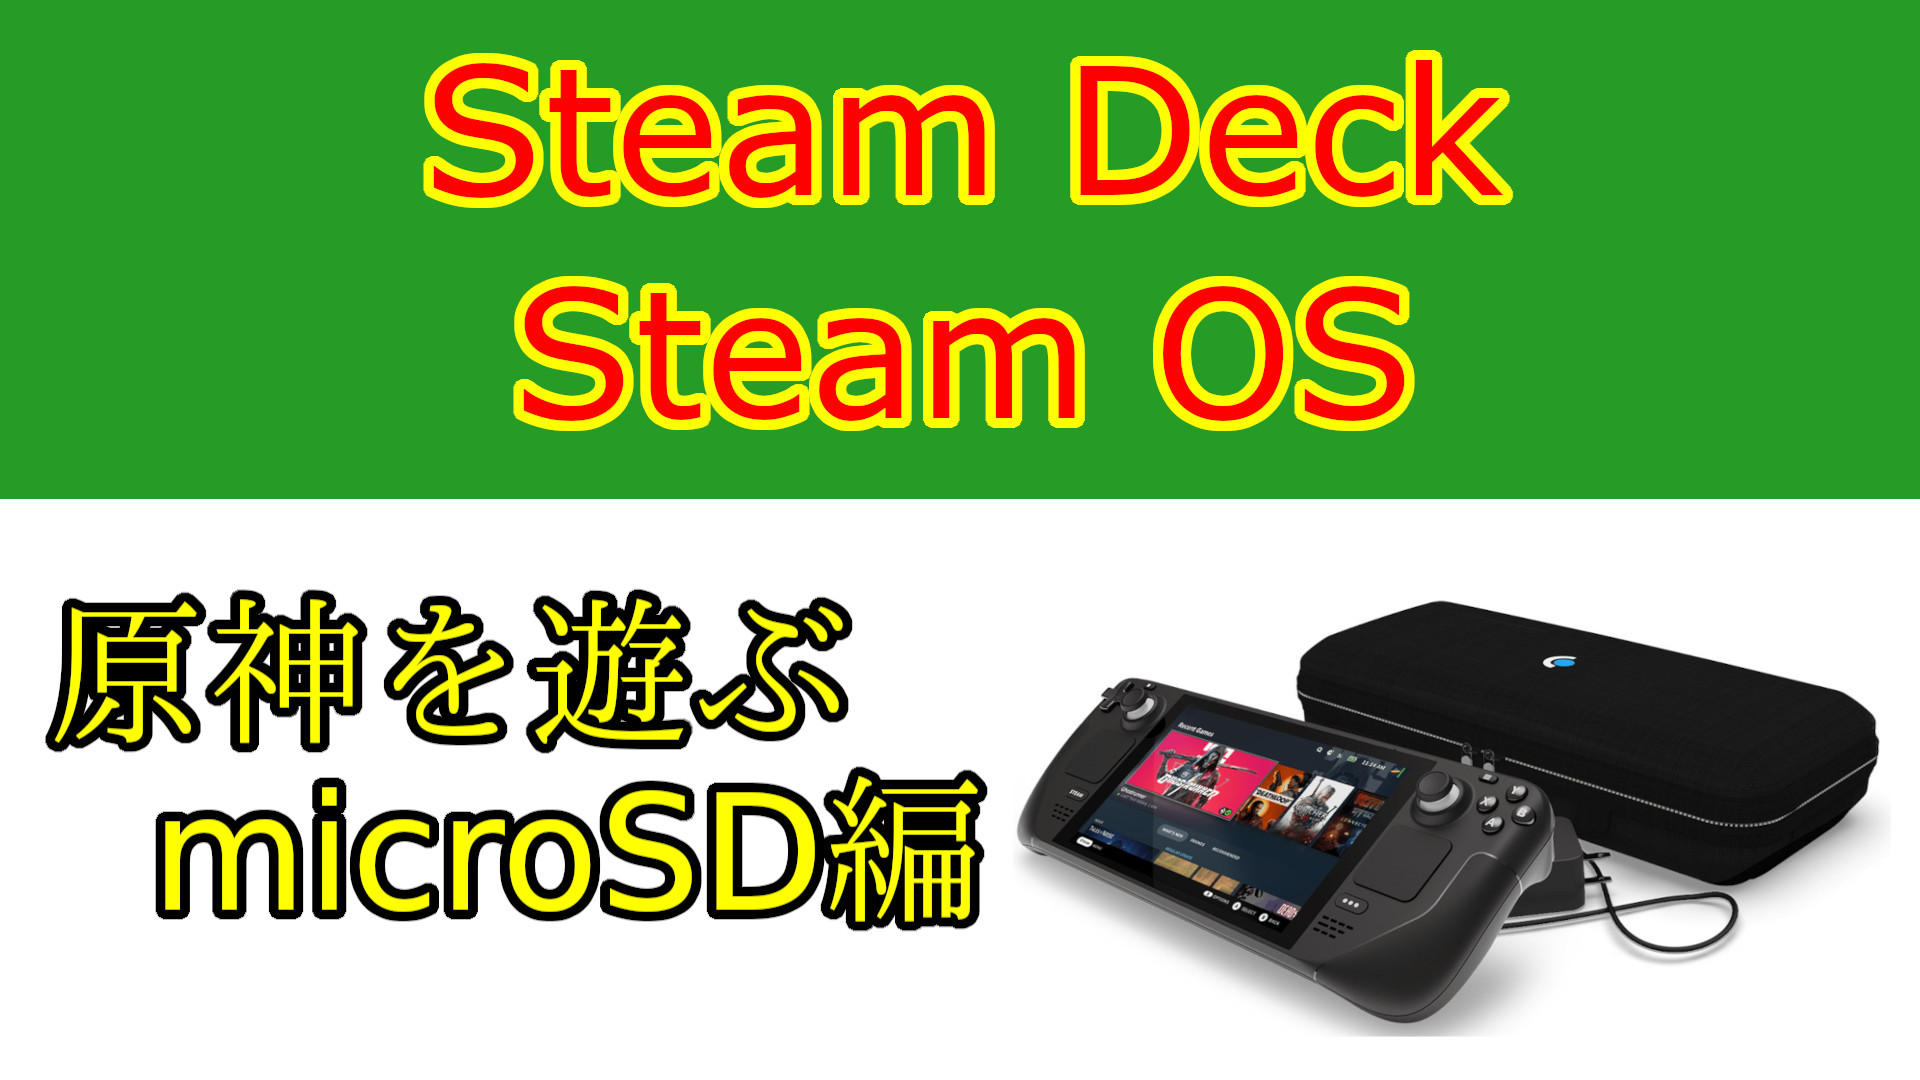 Steam Deck 1TB デュアルOS